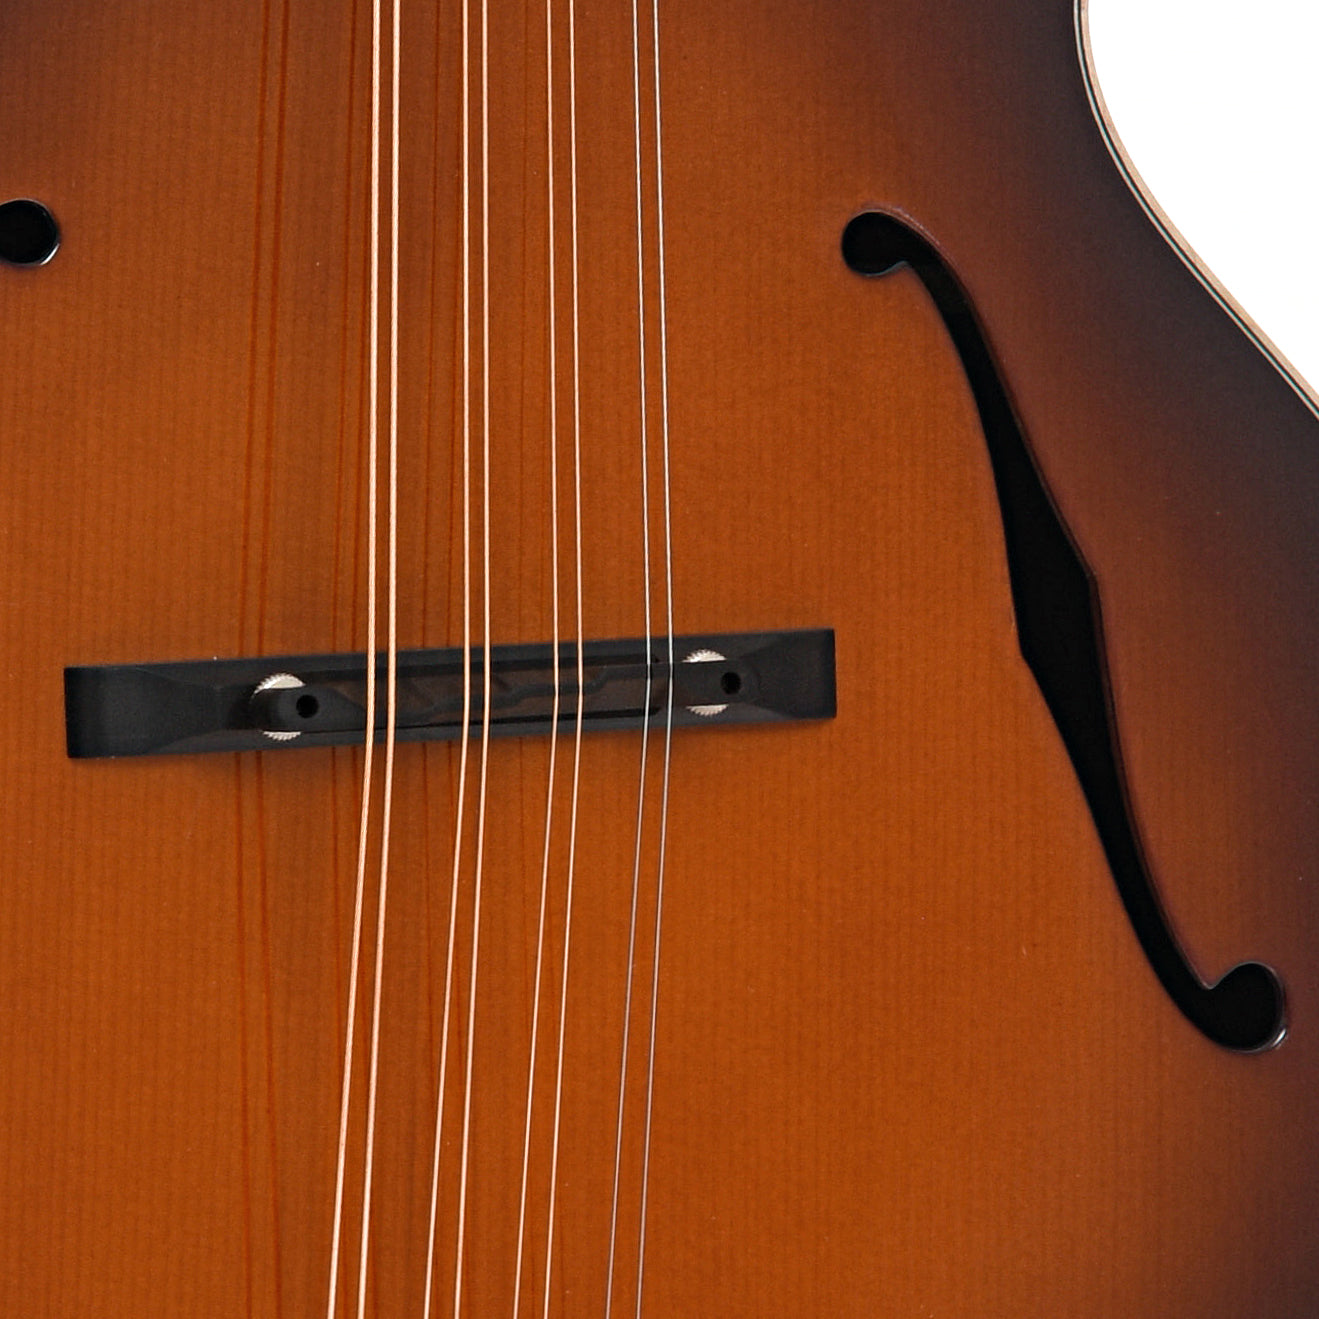 Bridge of KR Strings Octolindo F Deluxe Octave Mandolin